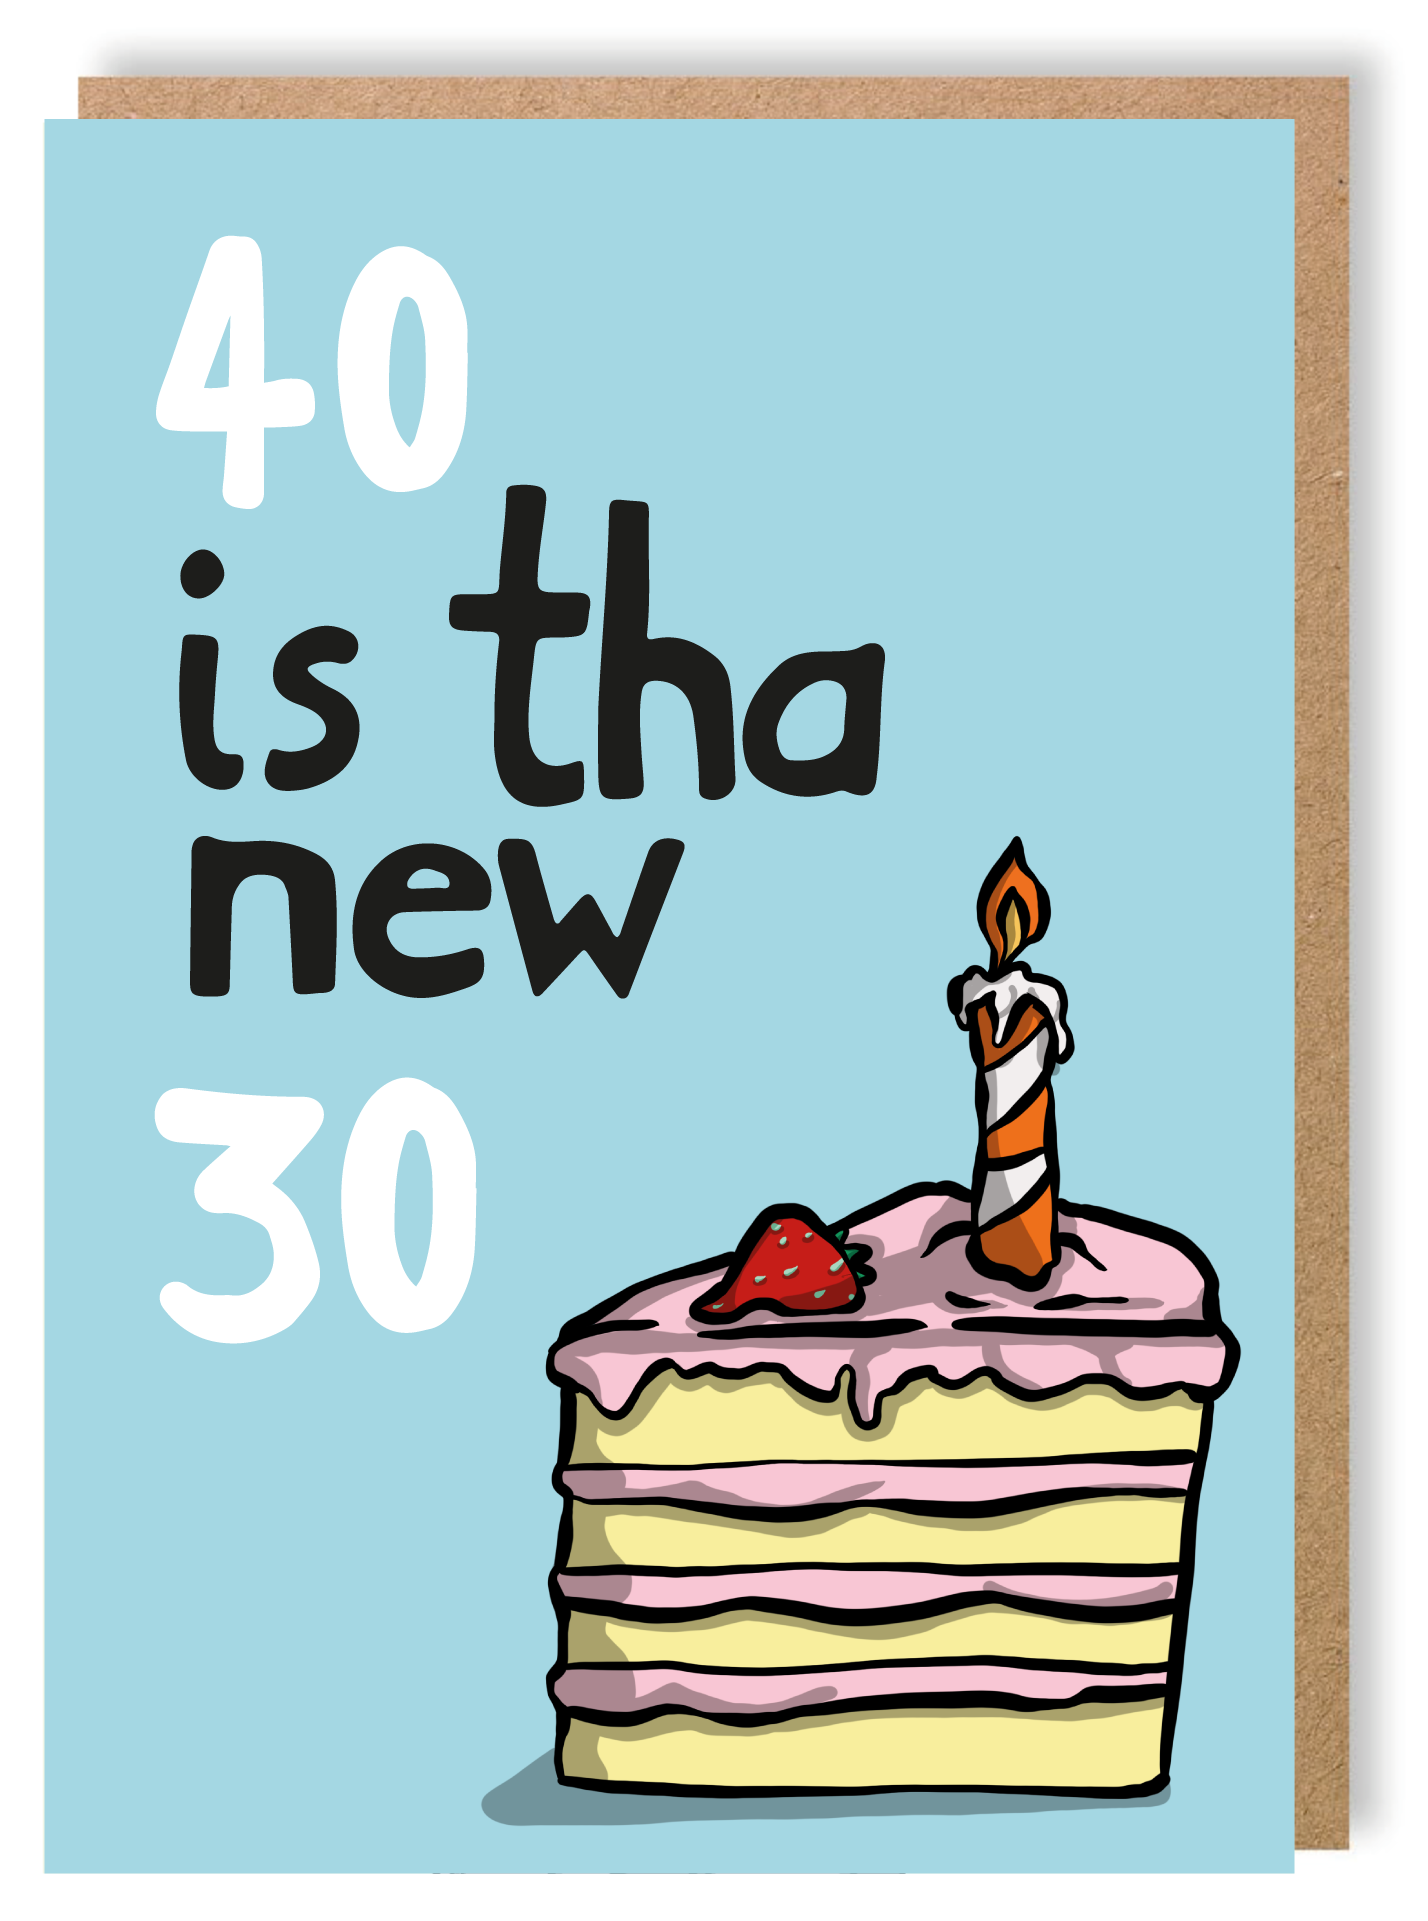 40 is tha new 30 - Greetings Card - LukeHorton Art